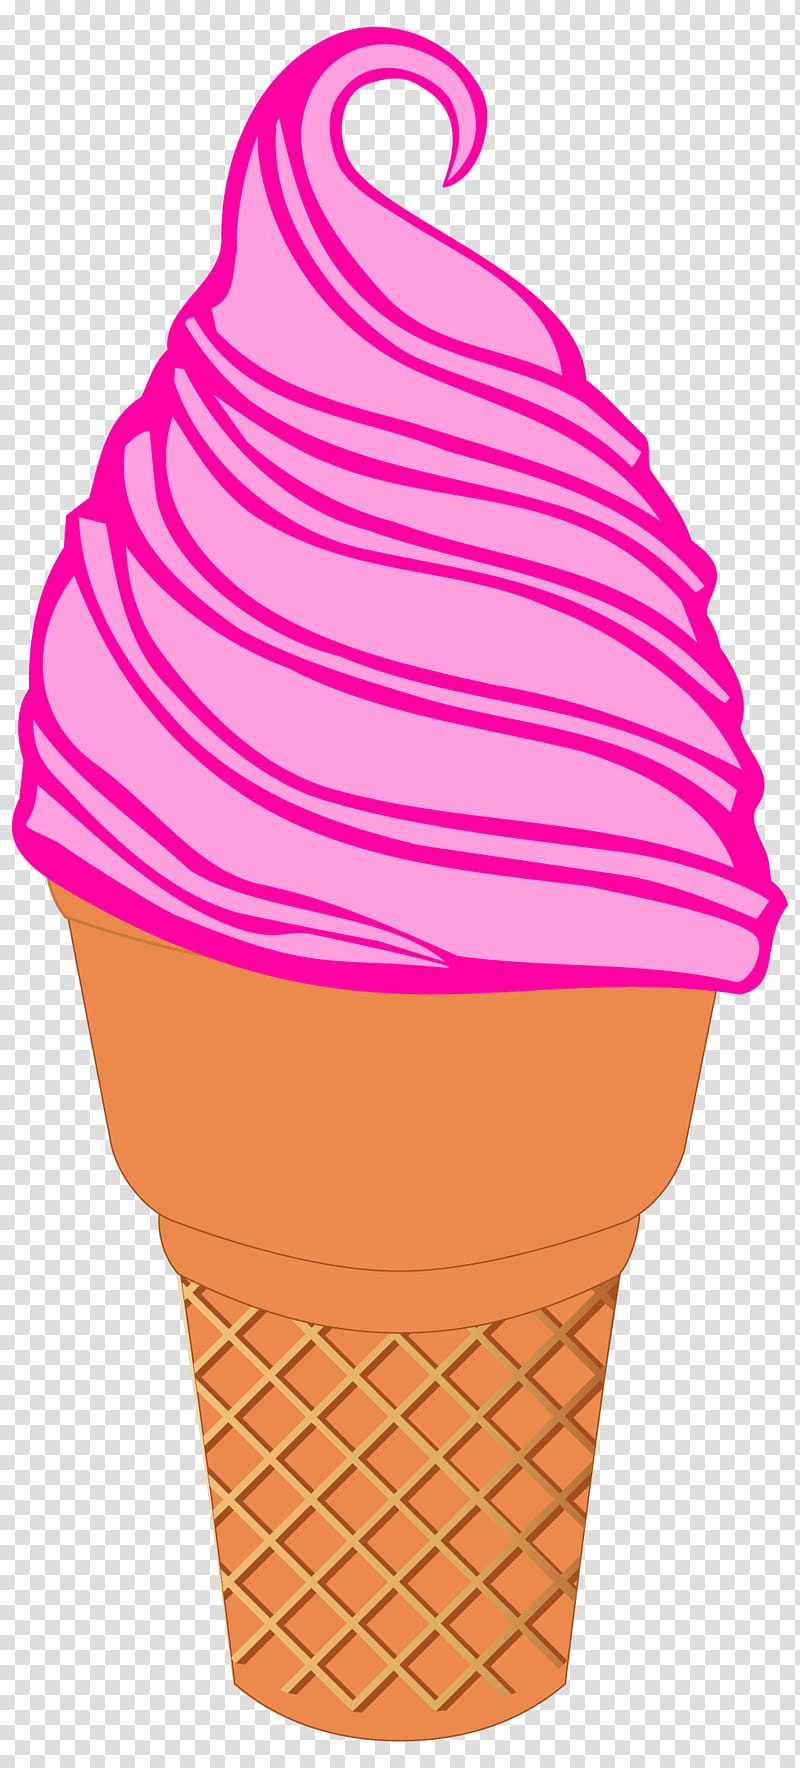 Ice Cream Cone, Ice Cream Cones, Waffle, Vanilla Ice Cream, Apple Pie, Strawberry, Food, Pink transparent background PNG clipart